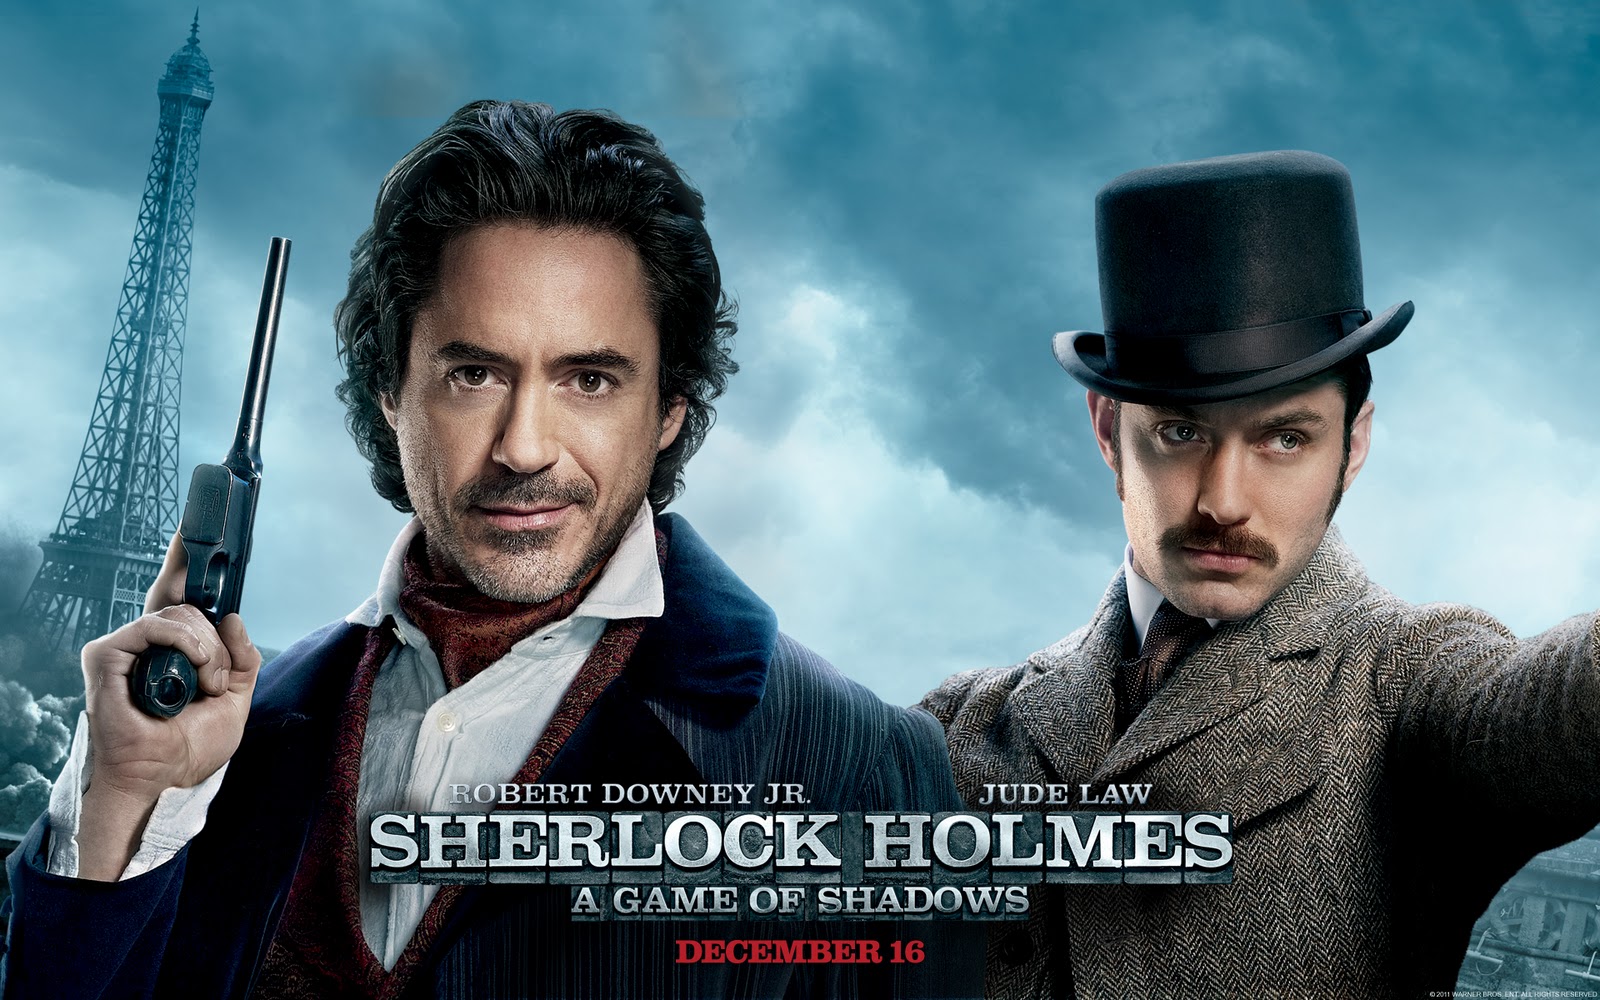 Sherlock Holmes 2 : Jeu d'ombres